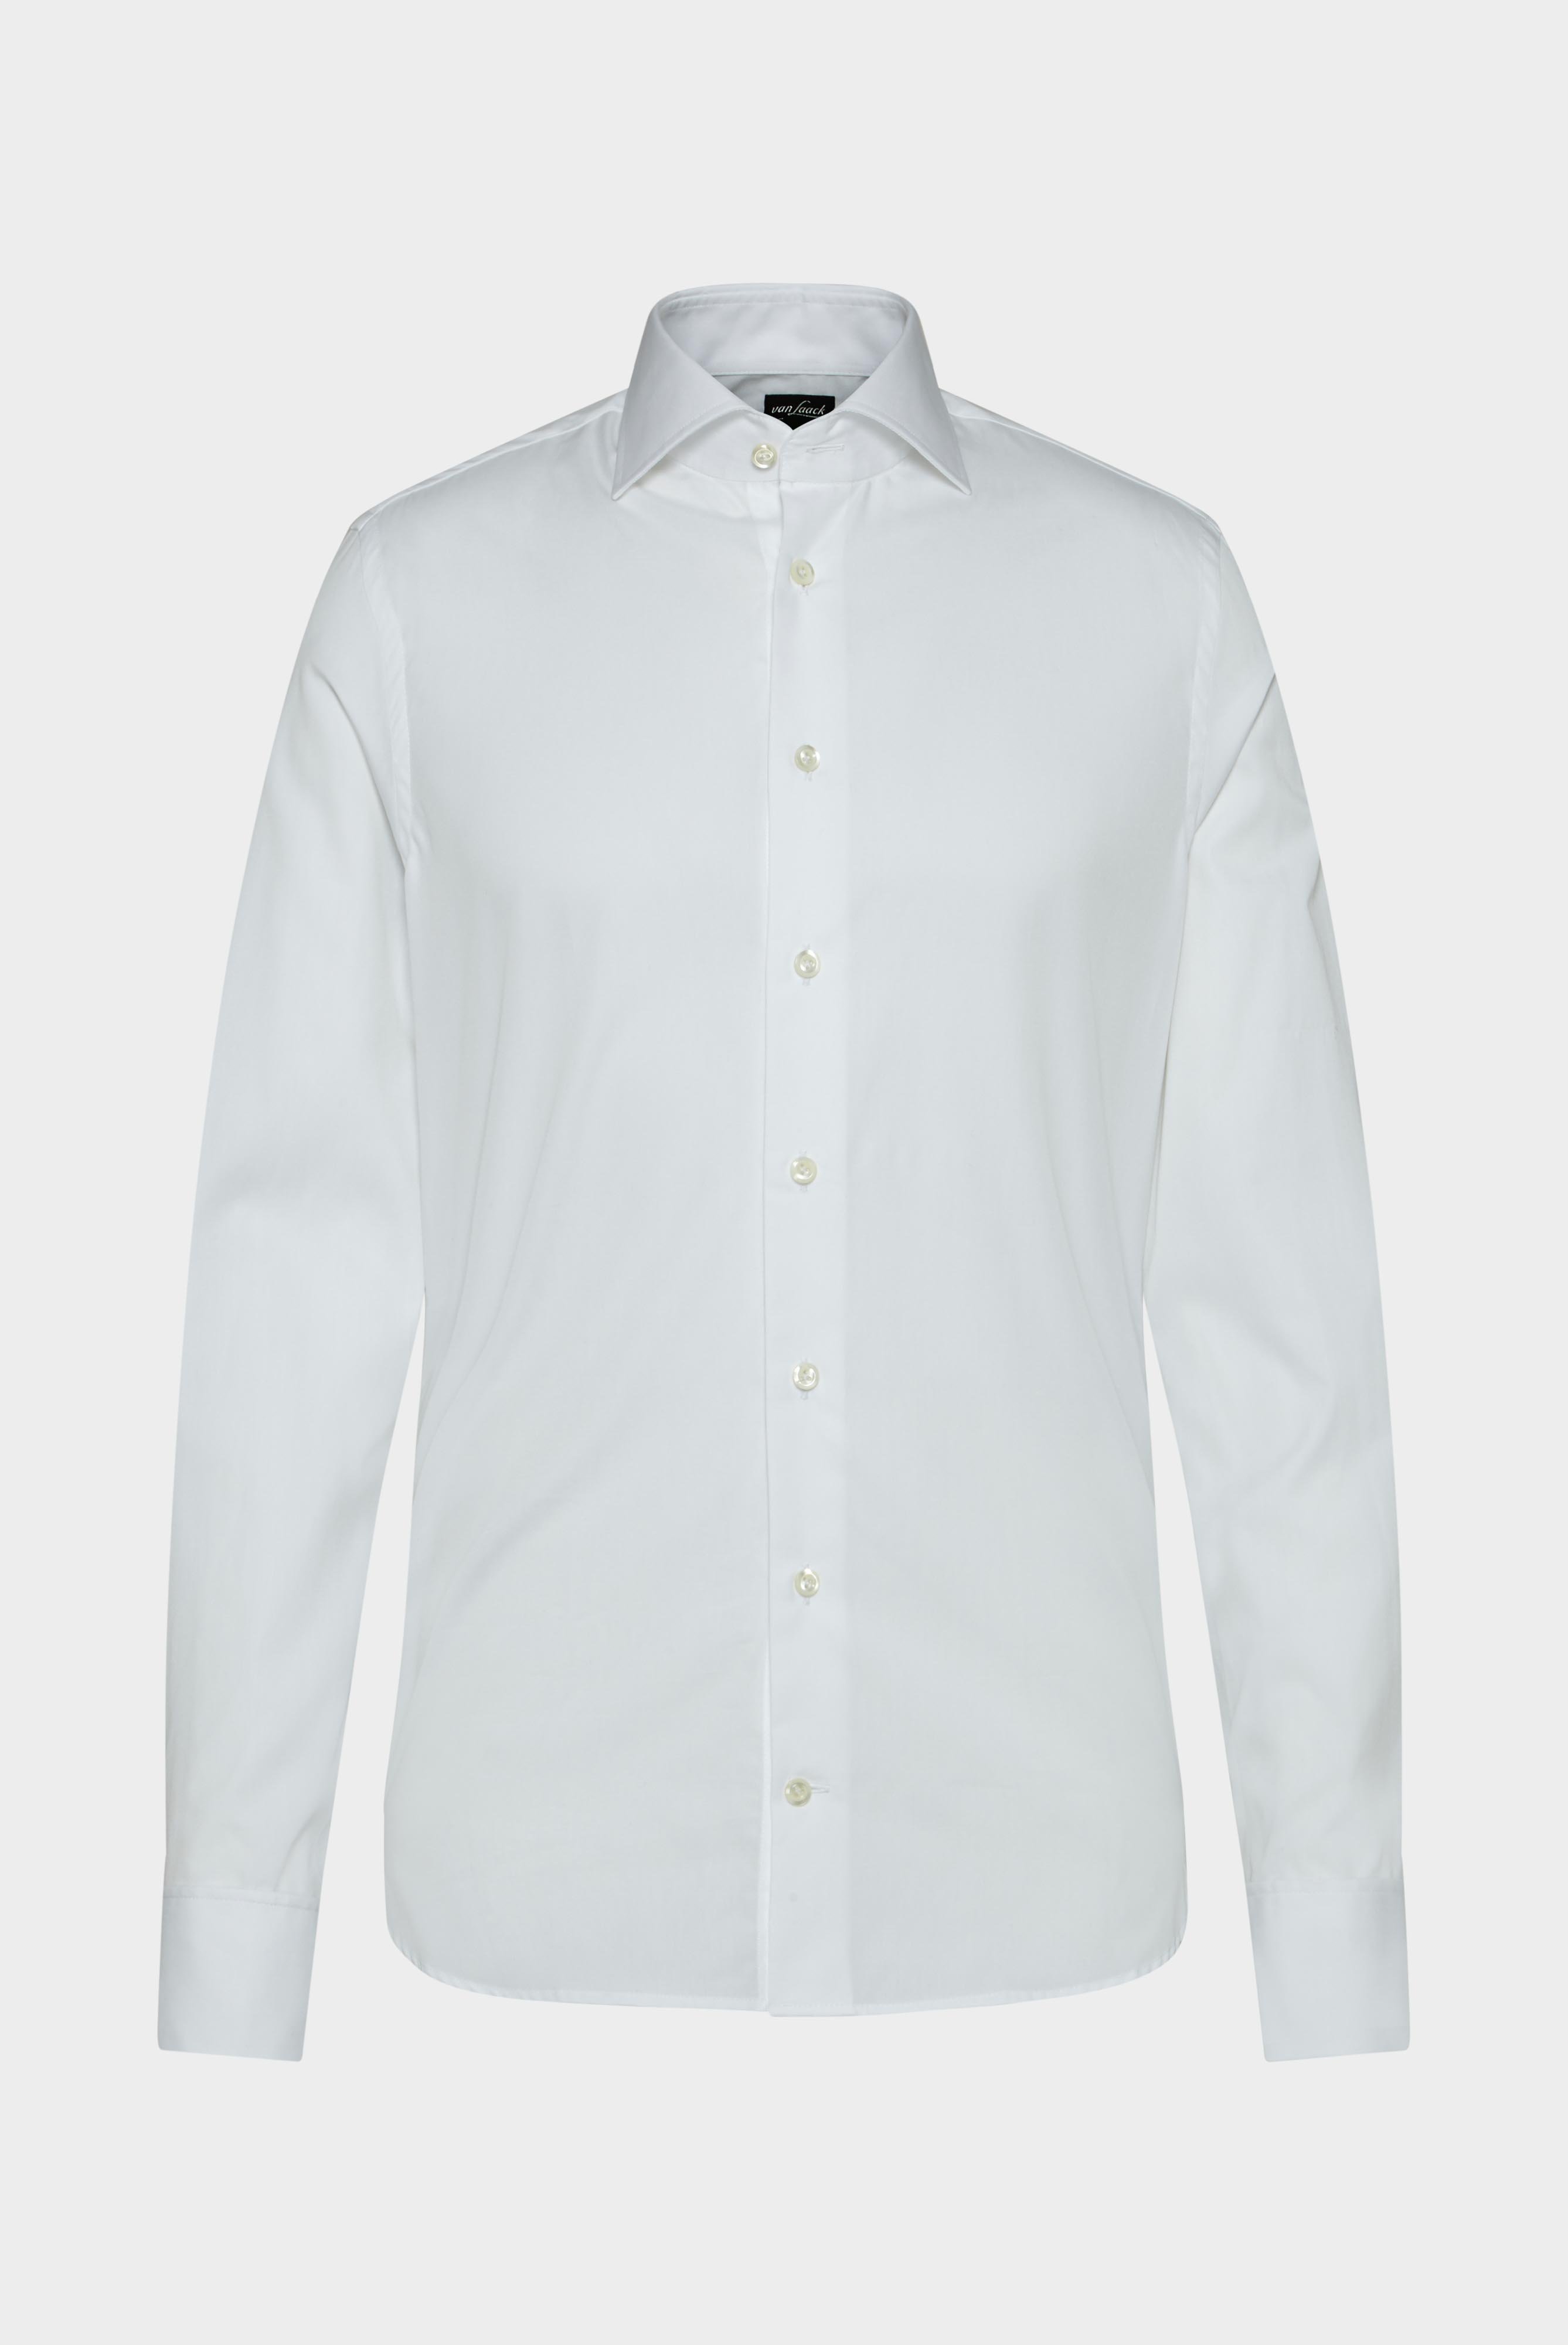 Business Shirts+Poplin Shirt Slim Fit+20.2043.AV.130648.000.37